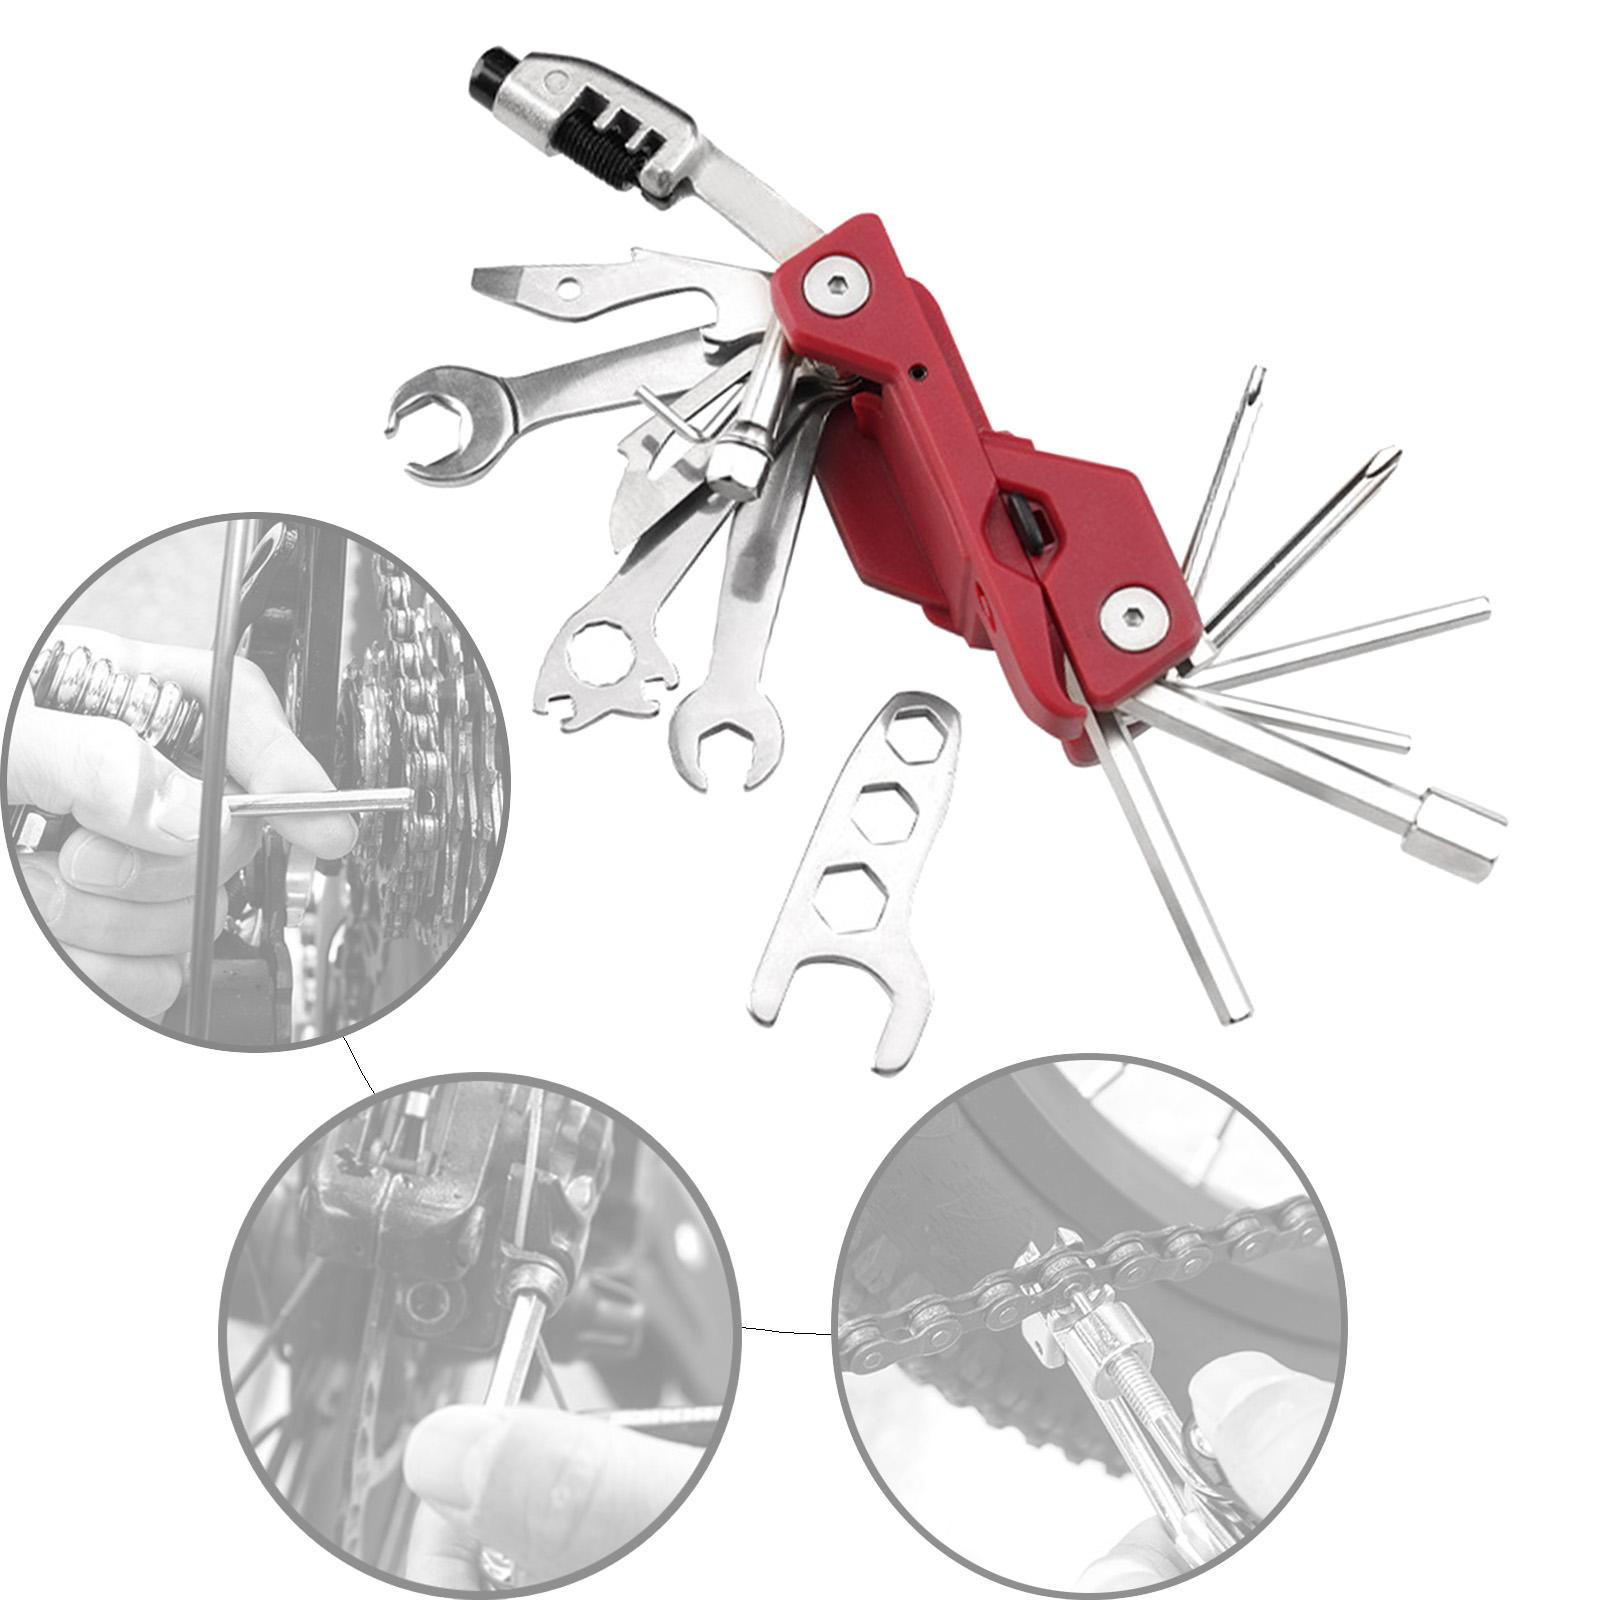 Bike Repair Tool Kit Screwdriver Multi Function for Emergency Maintenance Red